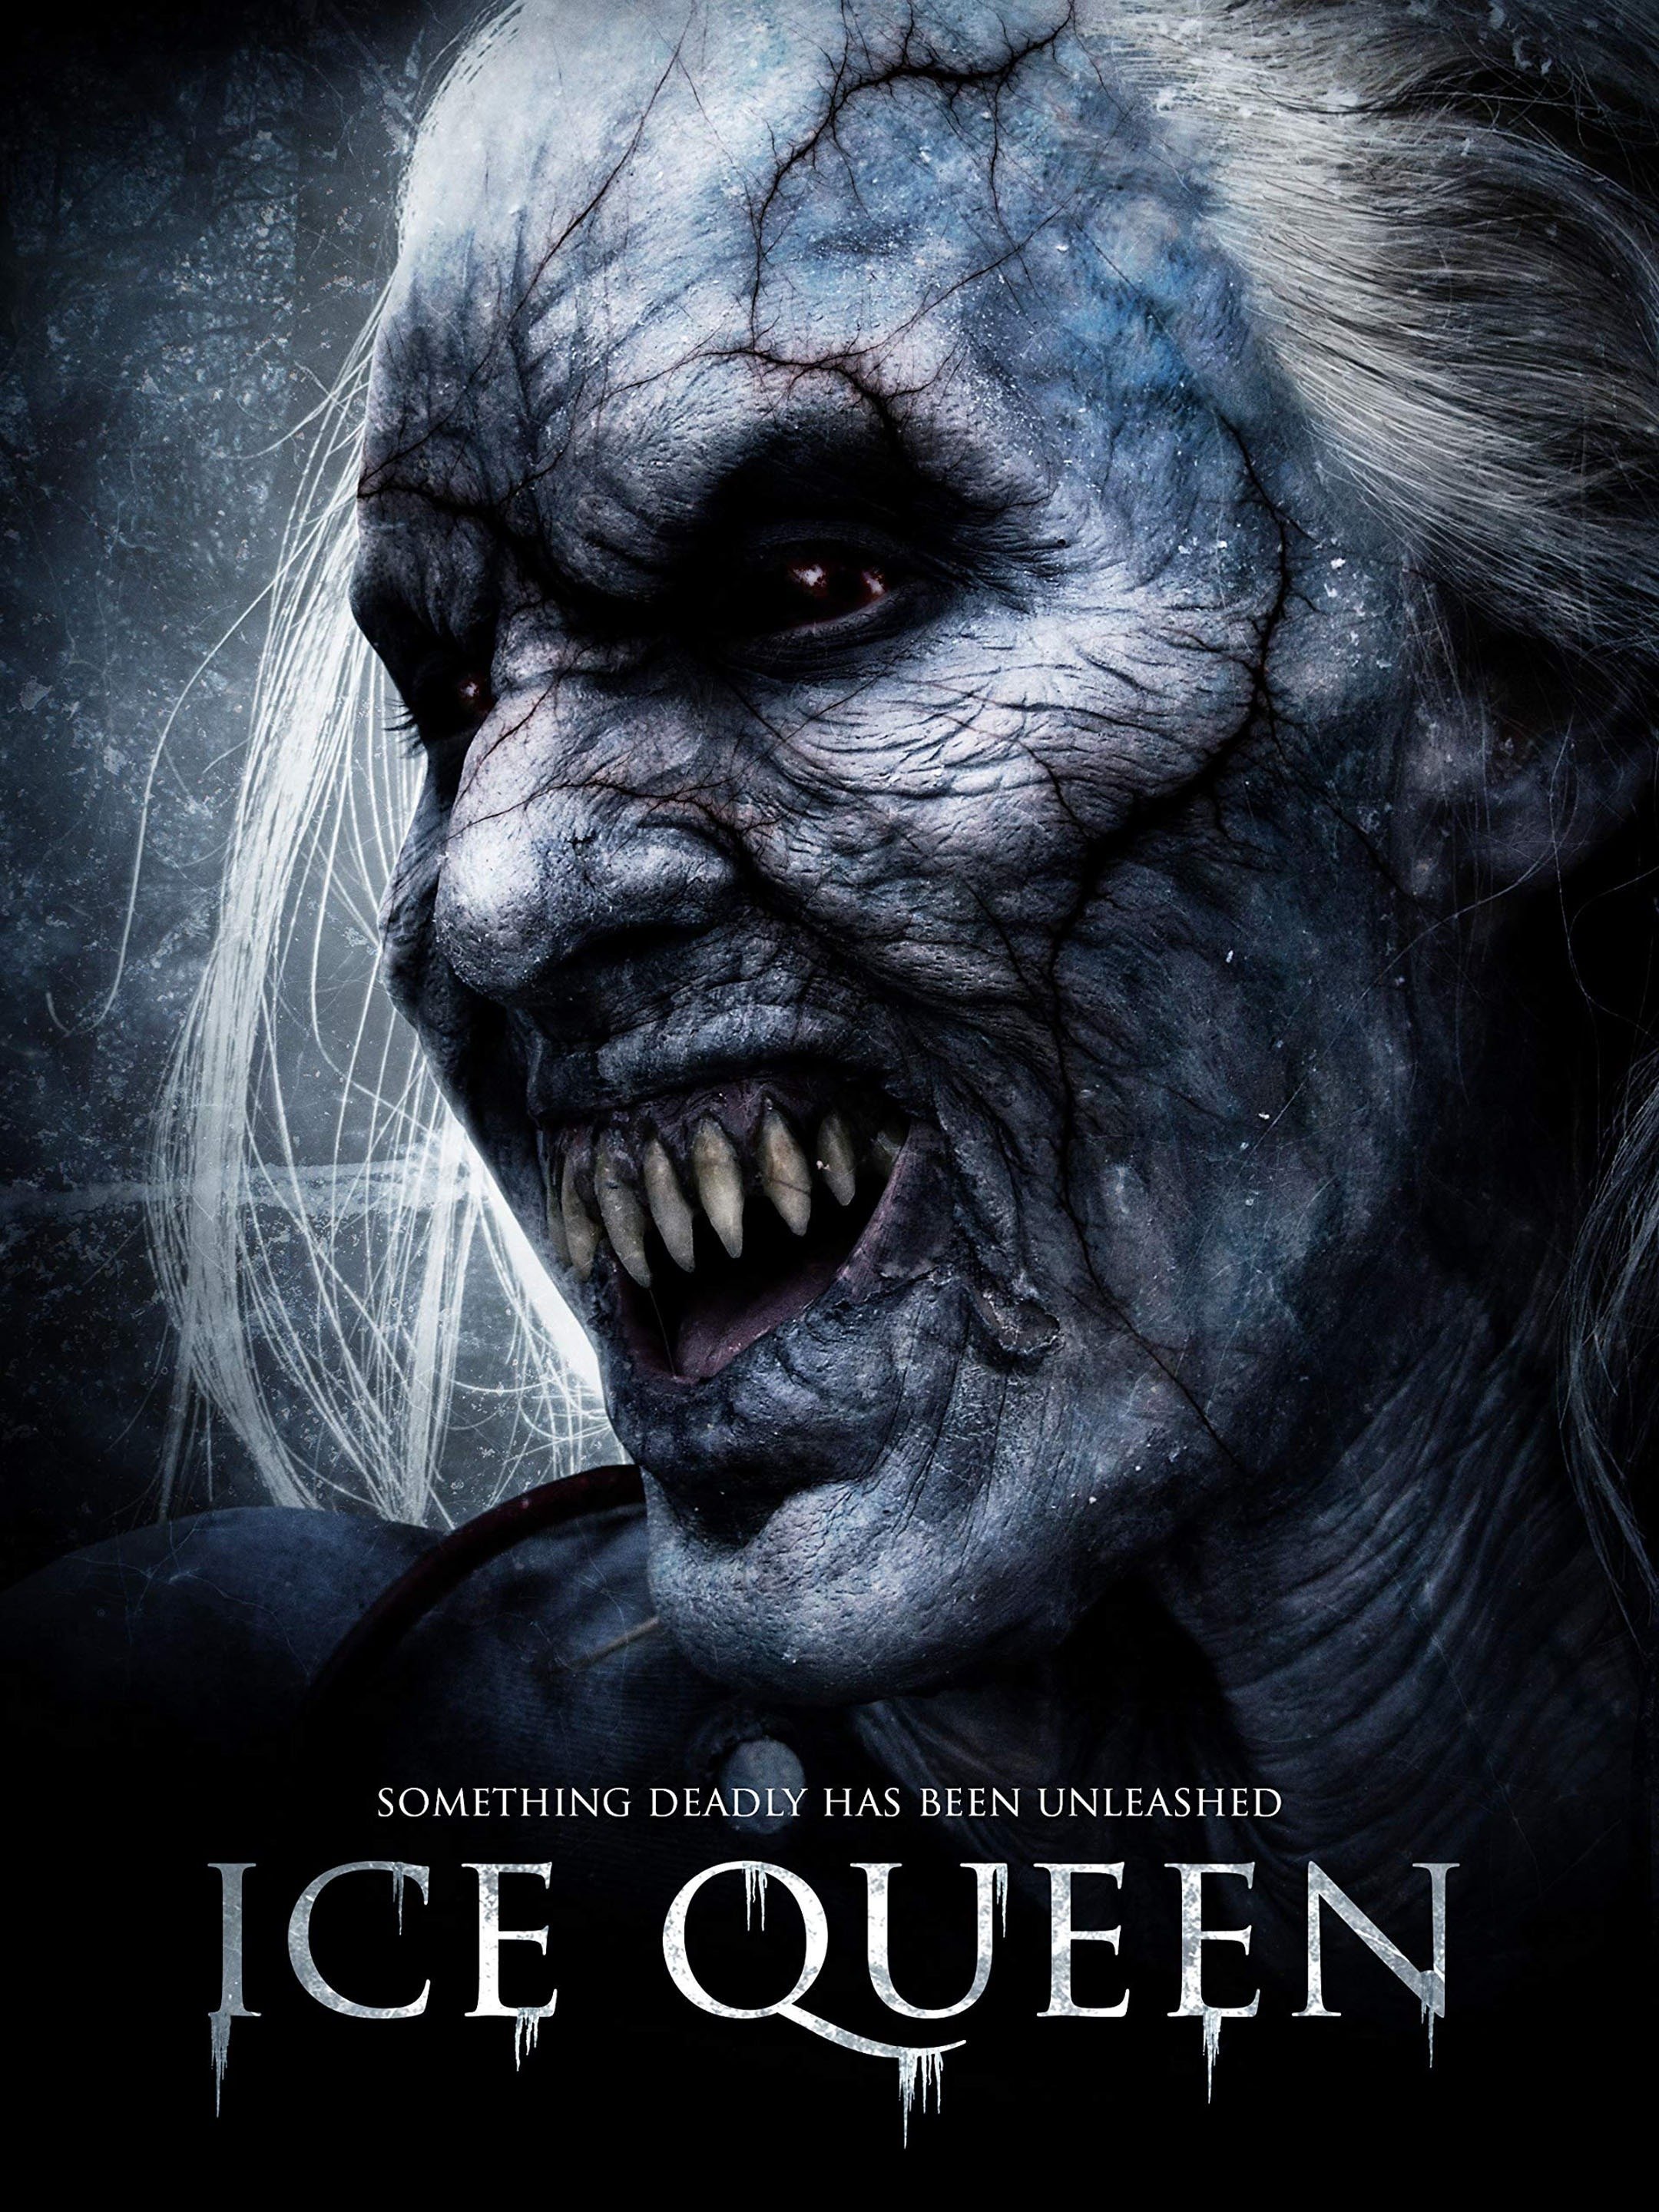 Ice Queen 05 Rotten Tomatoes